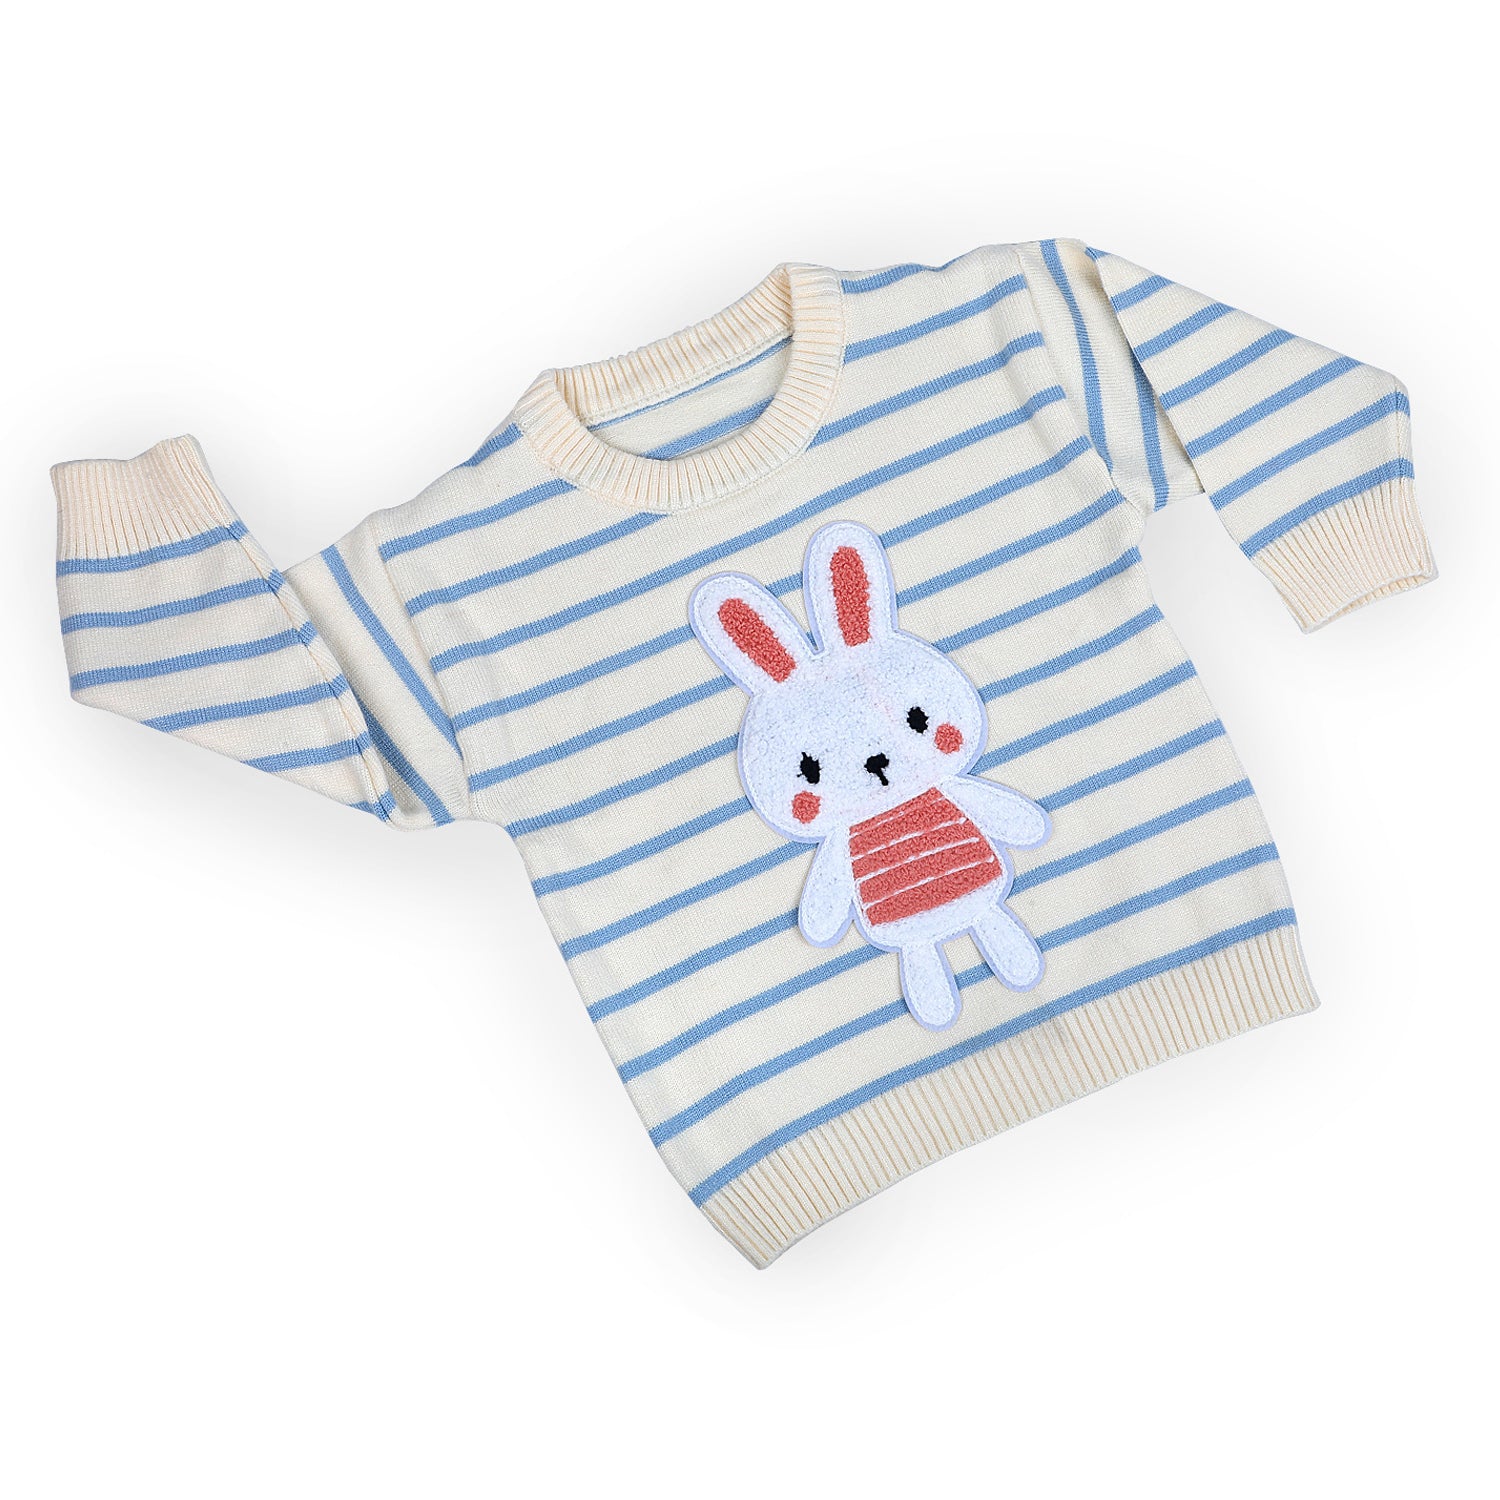 Hopping Rabbit Striped Premium Full Sleeves Knitted Sweater - Off White